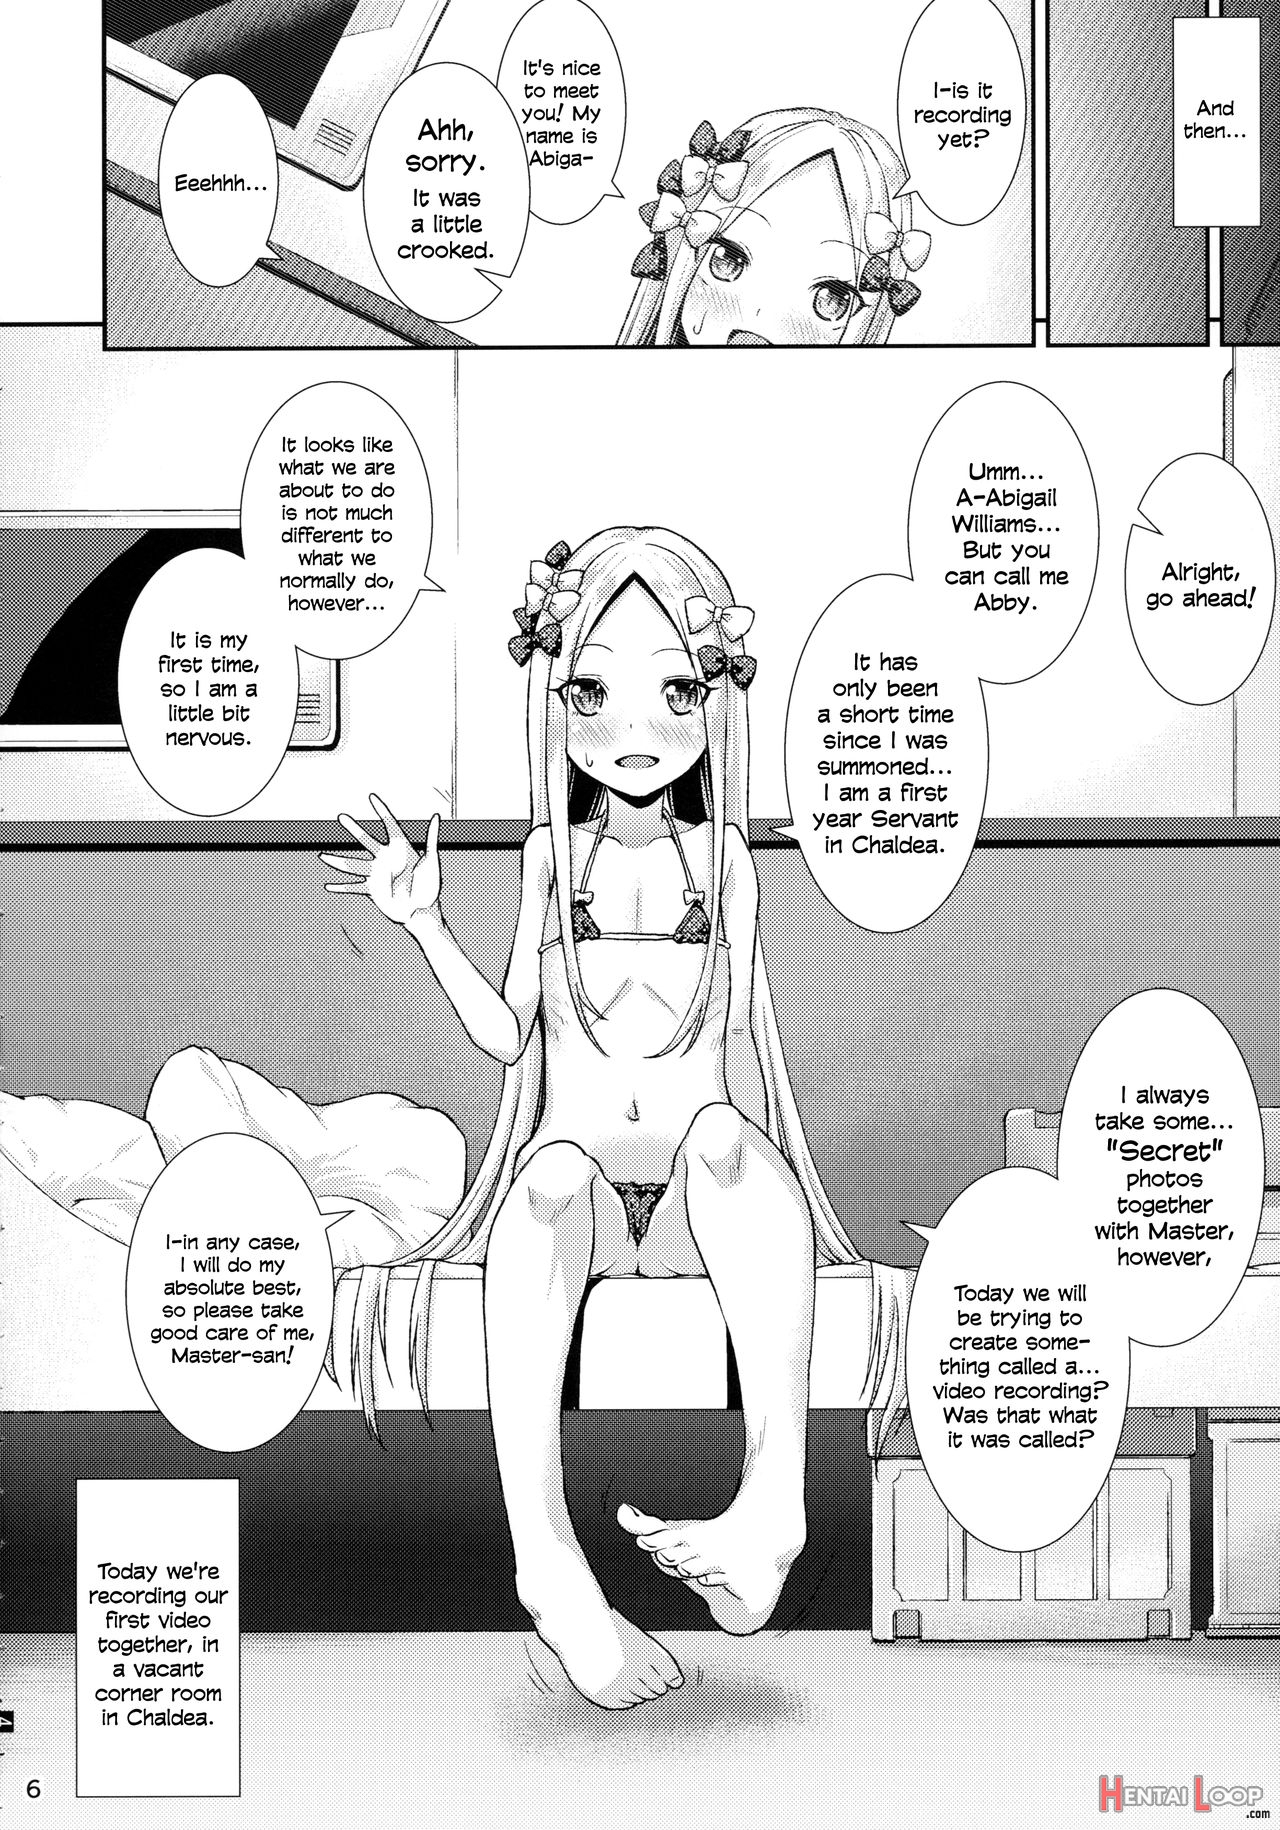 Page 5 of Abby And The Secret Homemade Sex Tape (by Yamazaki Kana) image